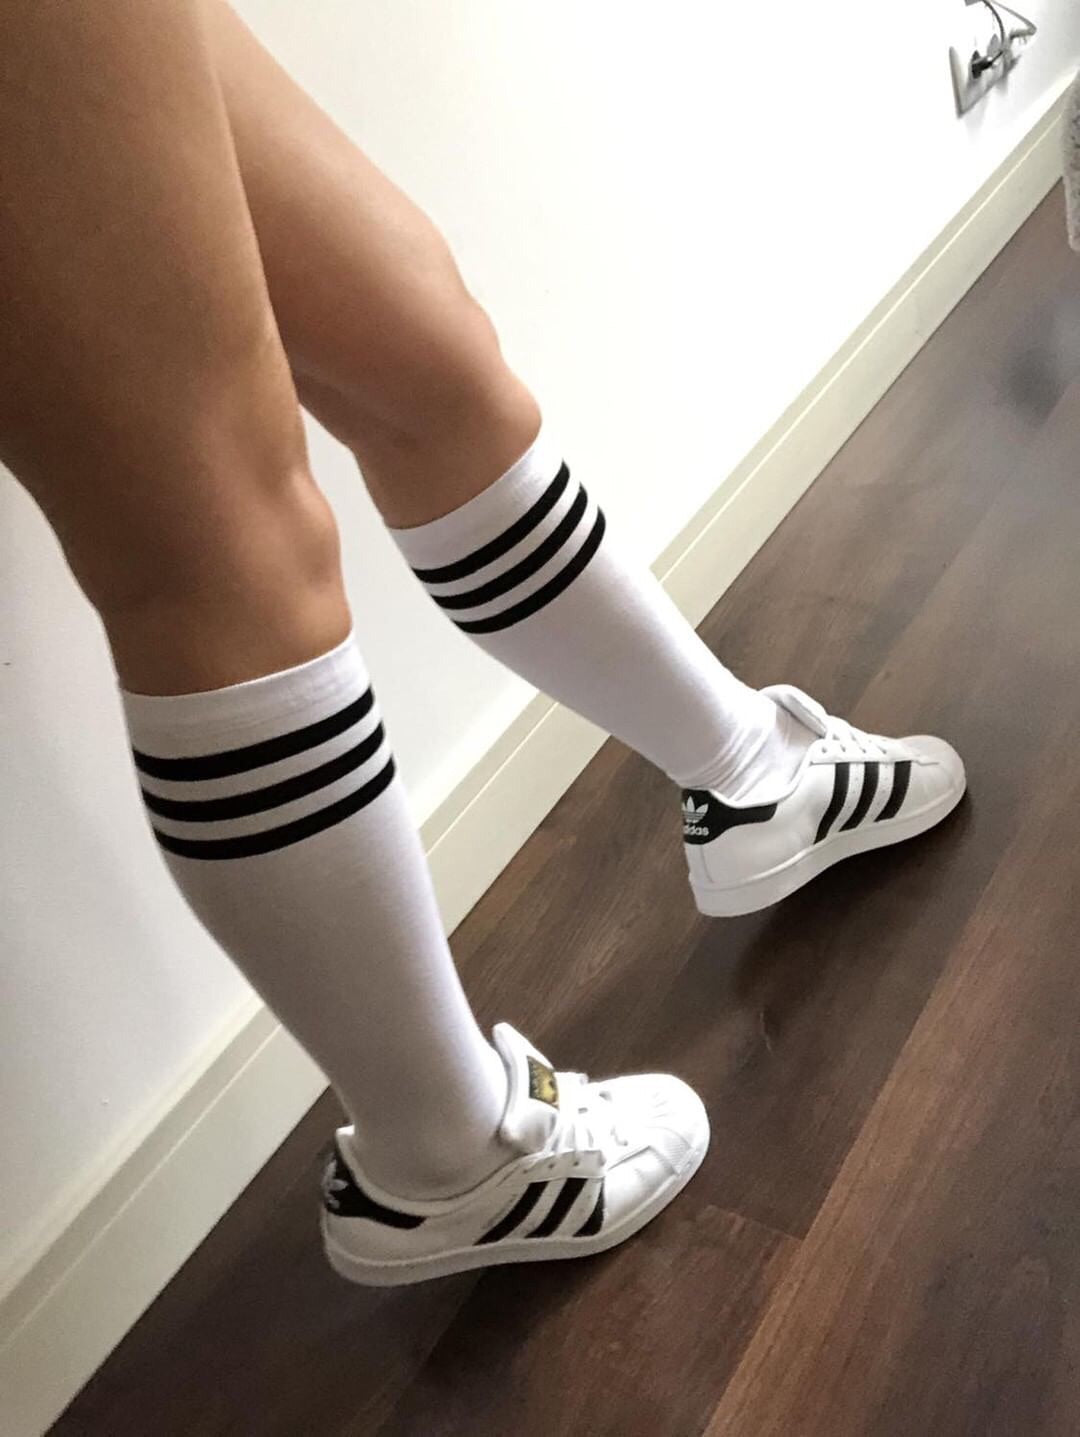 Black Striped Knee High Socks - Global Trendz Fashion®